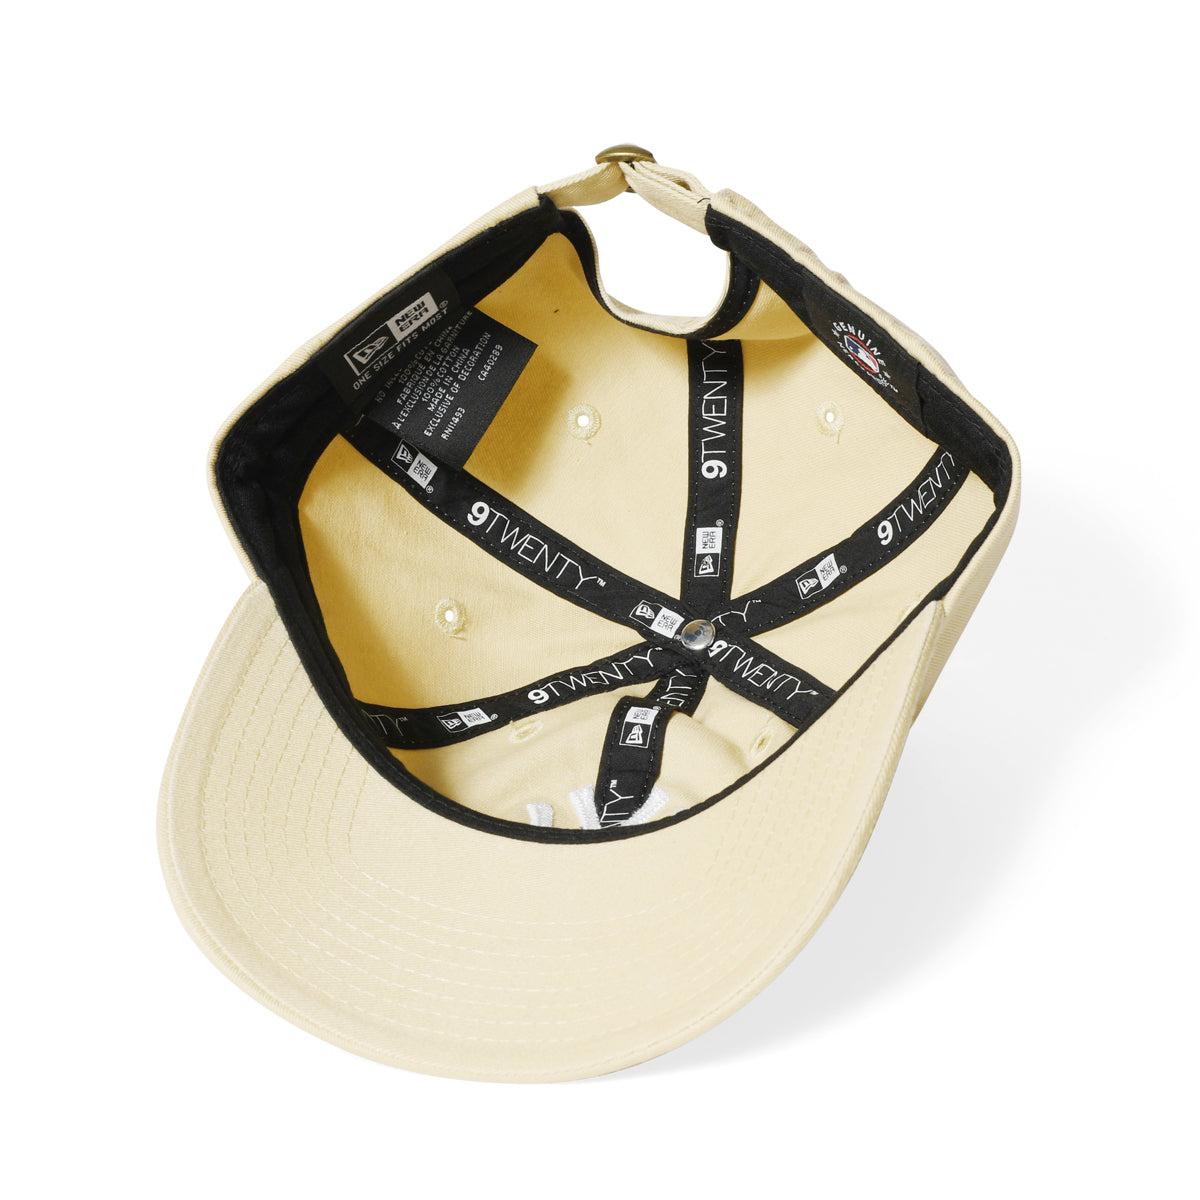 Mets Snapbacks Adjustable Baseball Caps Knit Hats Sports Knitted